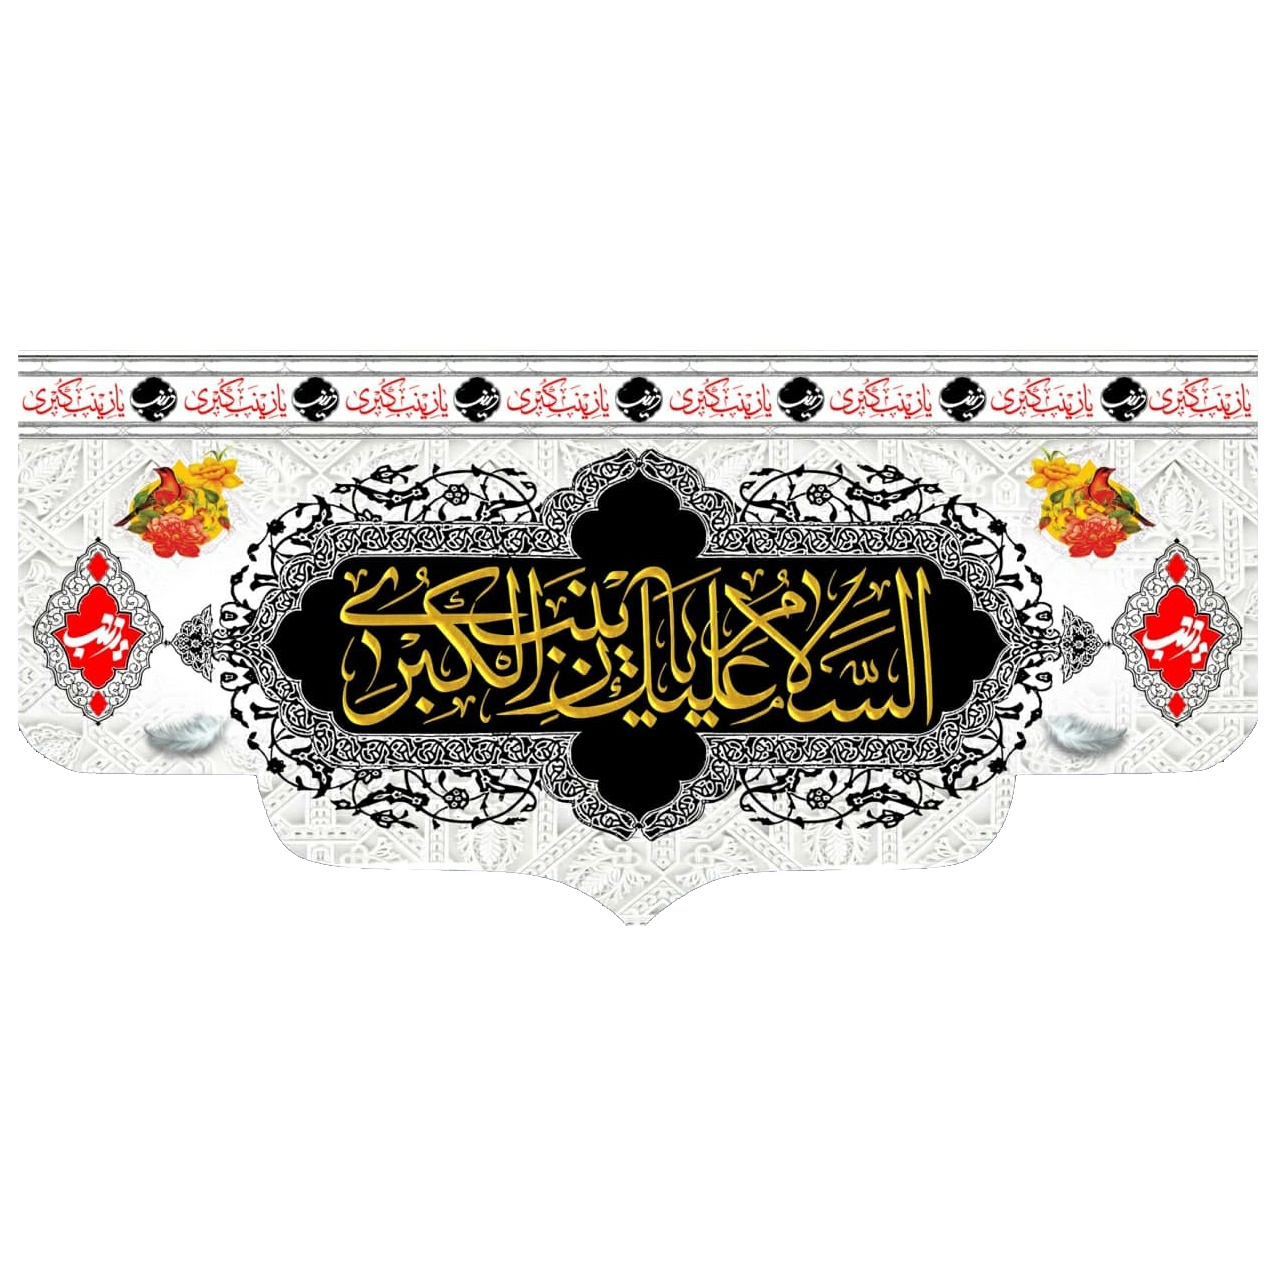 پرچم مدل السلام علیک یا زینب الکبری کد 150001-3140